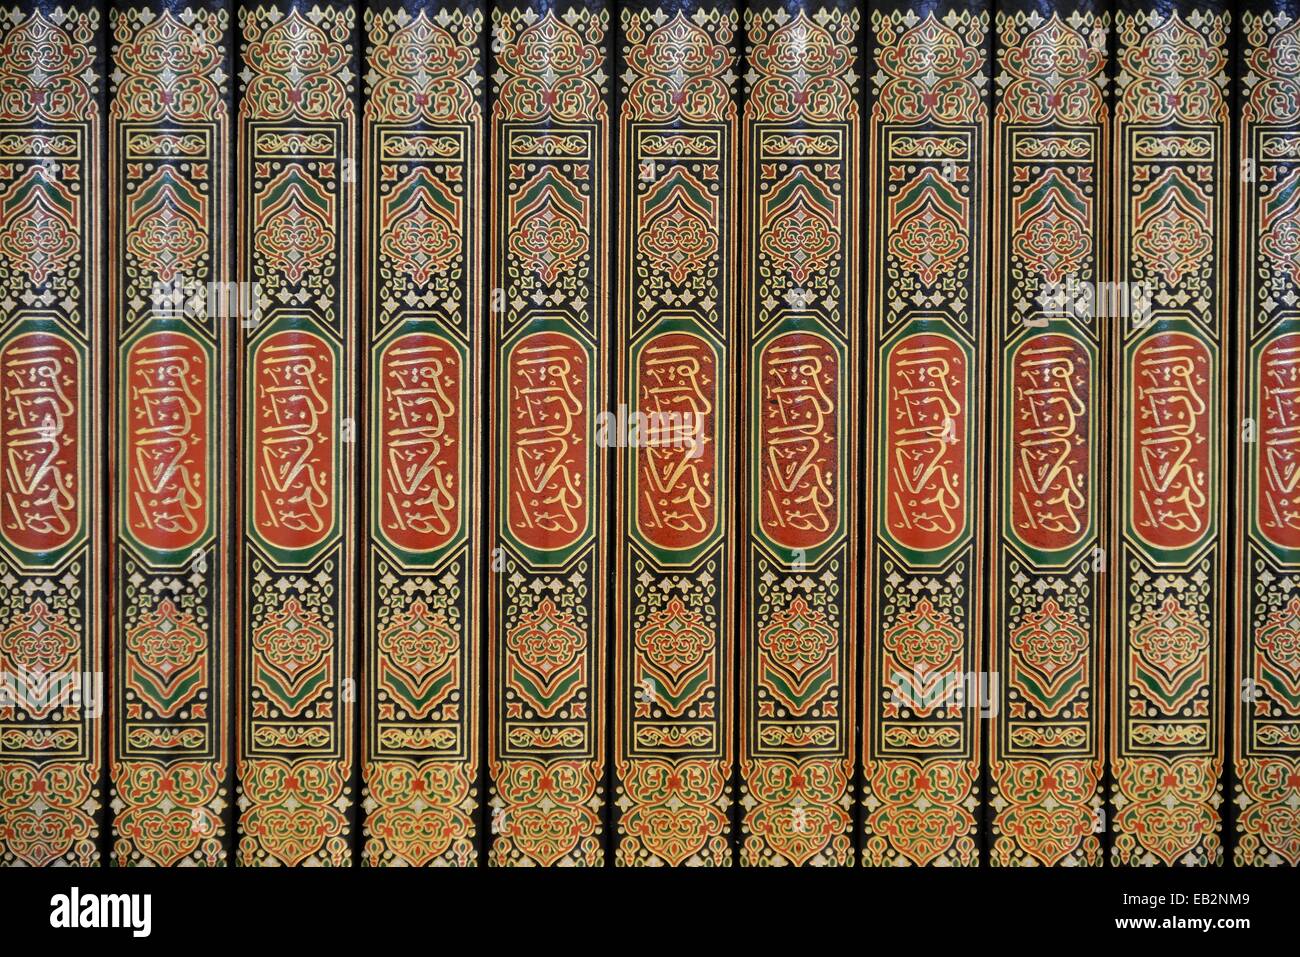 Row of volumes of the Koran, Sultan Qaboos Mosque, Salalah, Orient, Oman Stock Photo